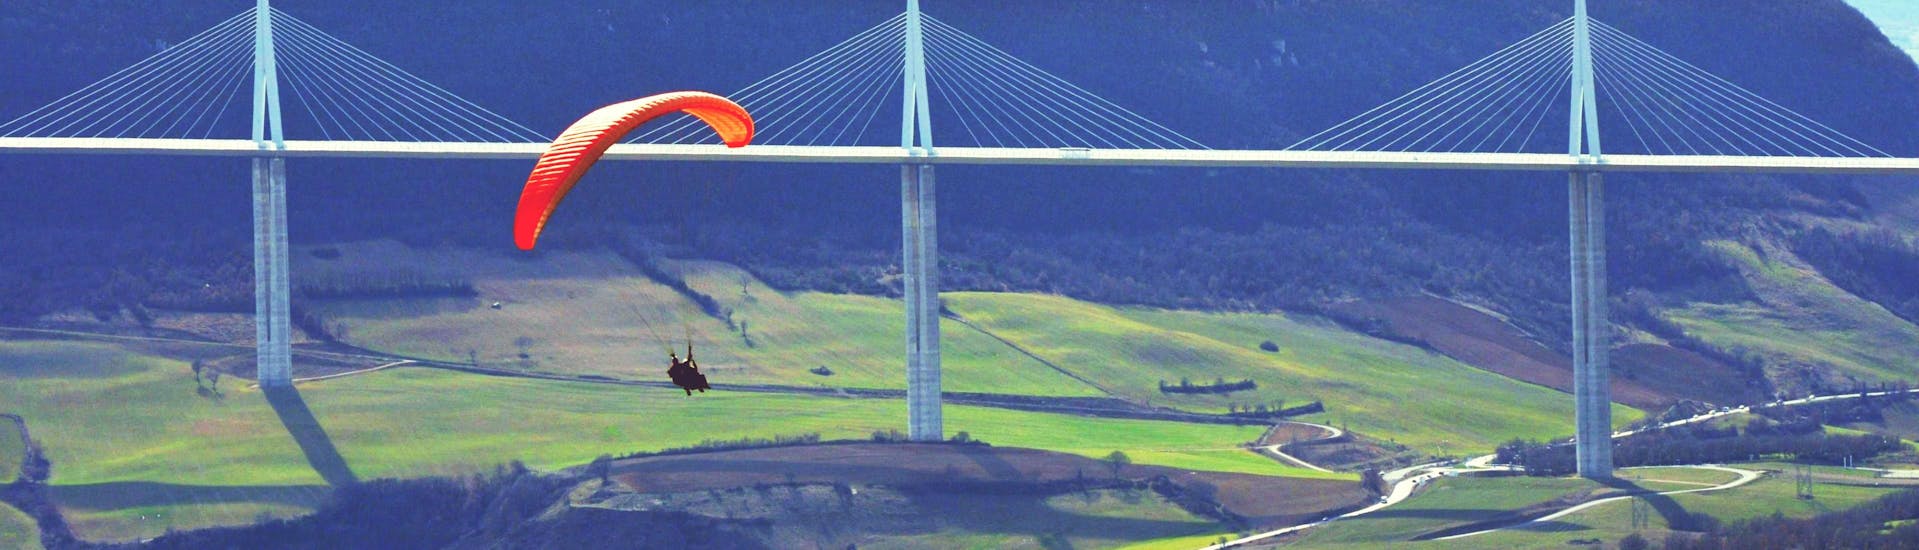 Thermisch tandem paragliding in Millau (vanaf 12 j.) - Grands Causses (regionaal natuurpark).